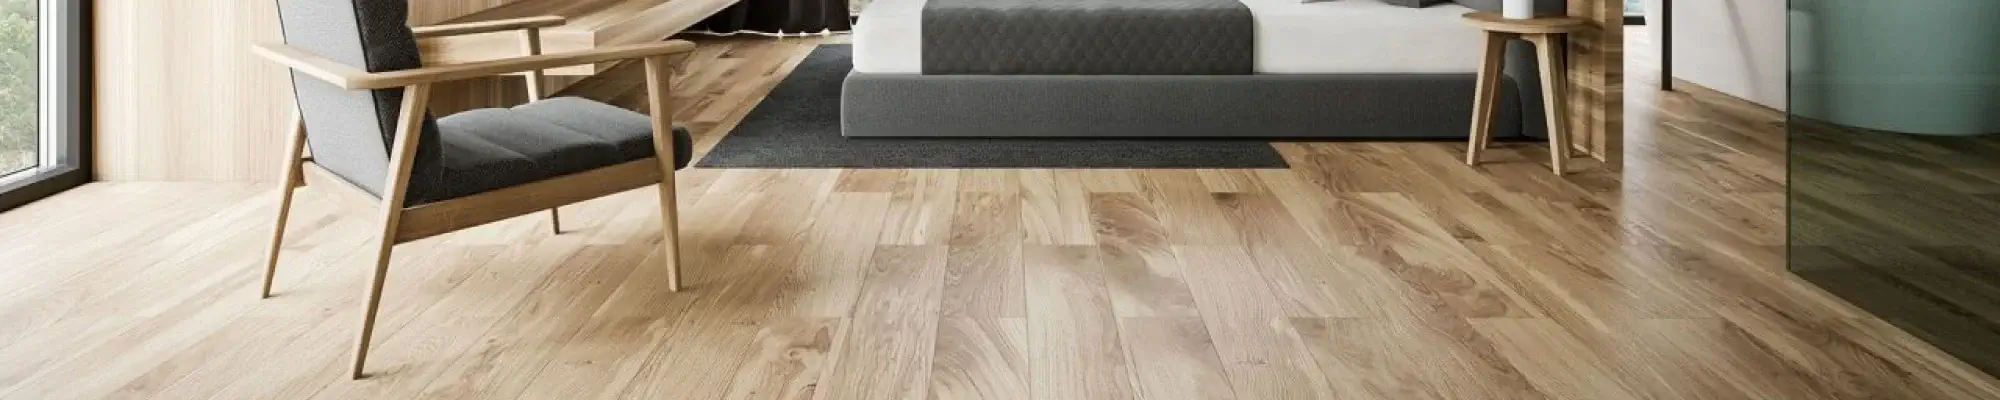 Laminate flooring information From Carpet Masters in Saint Joseph, MO